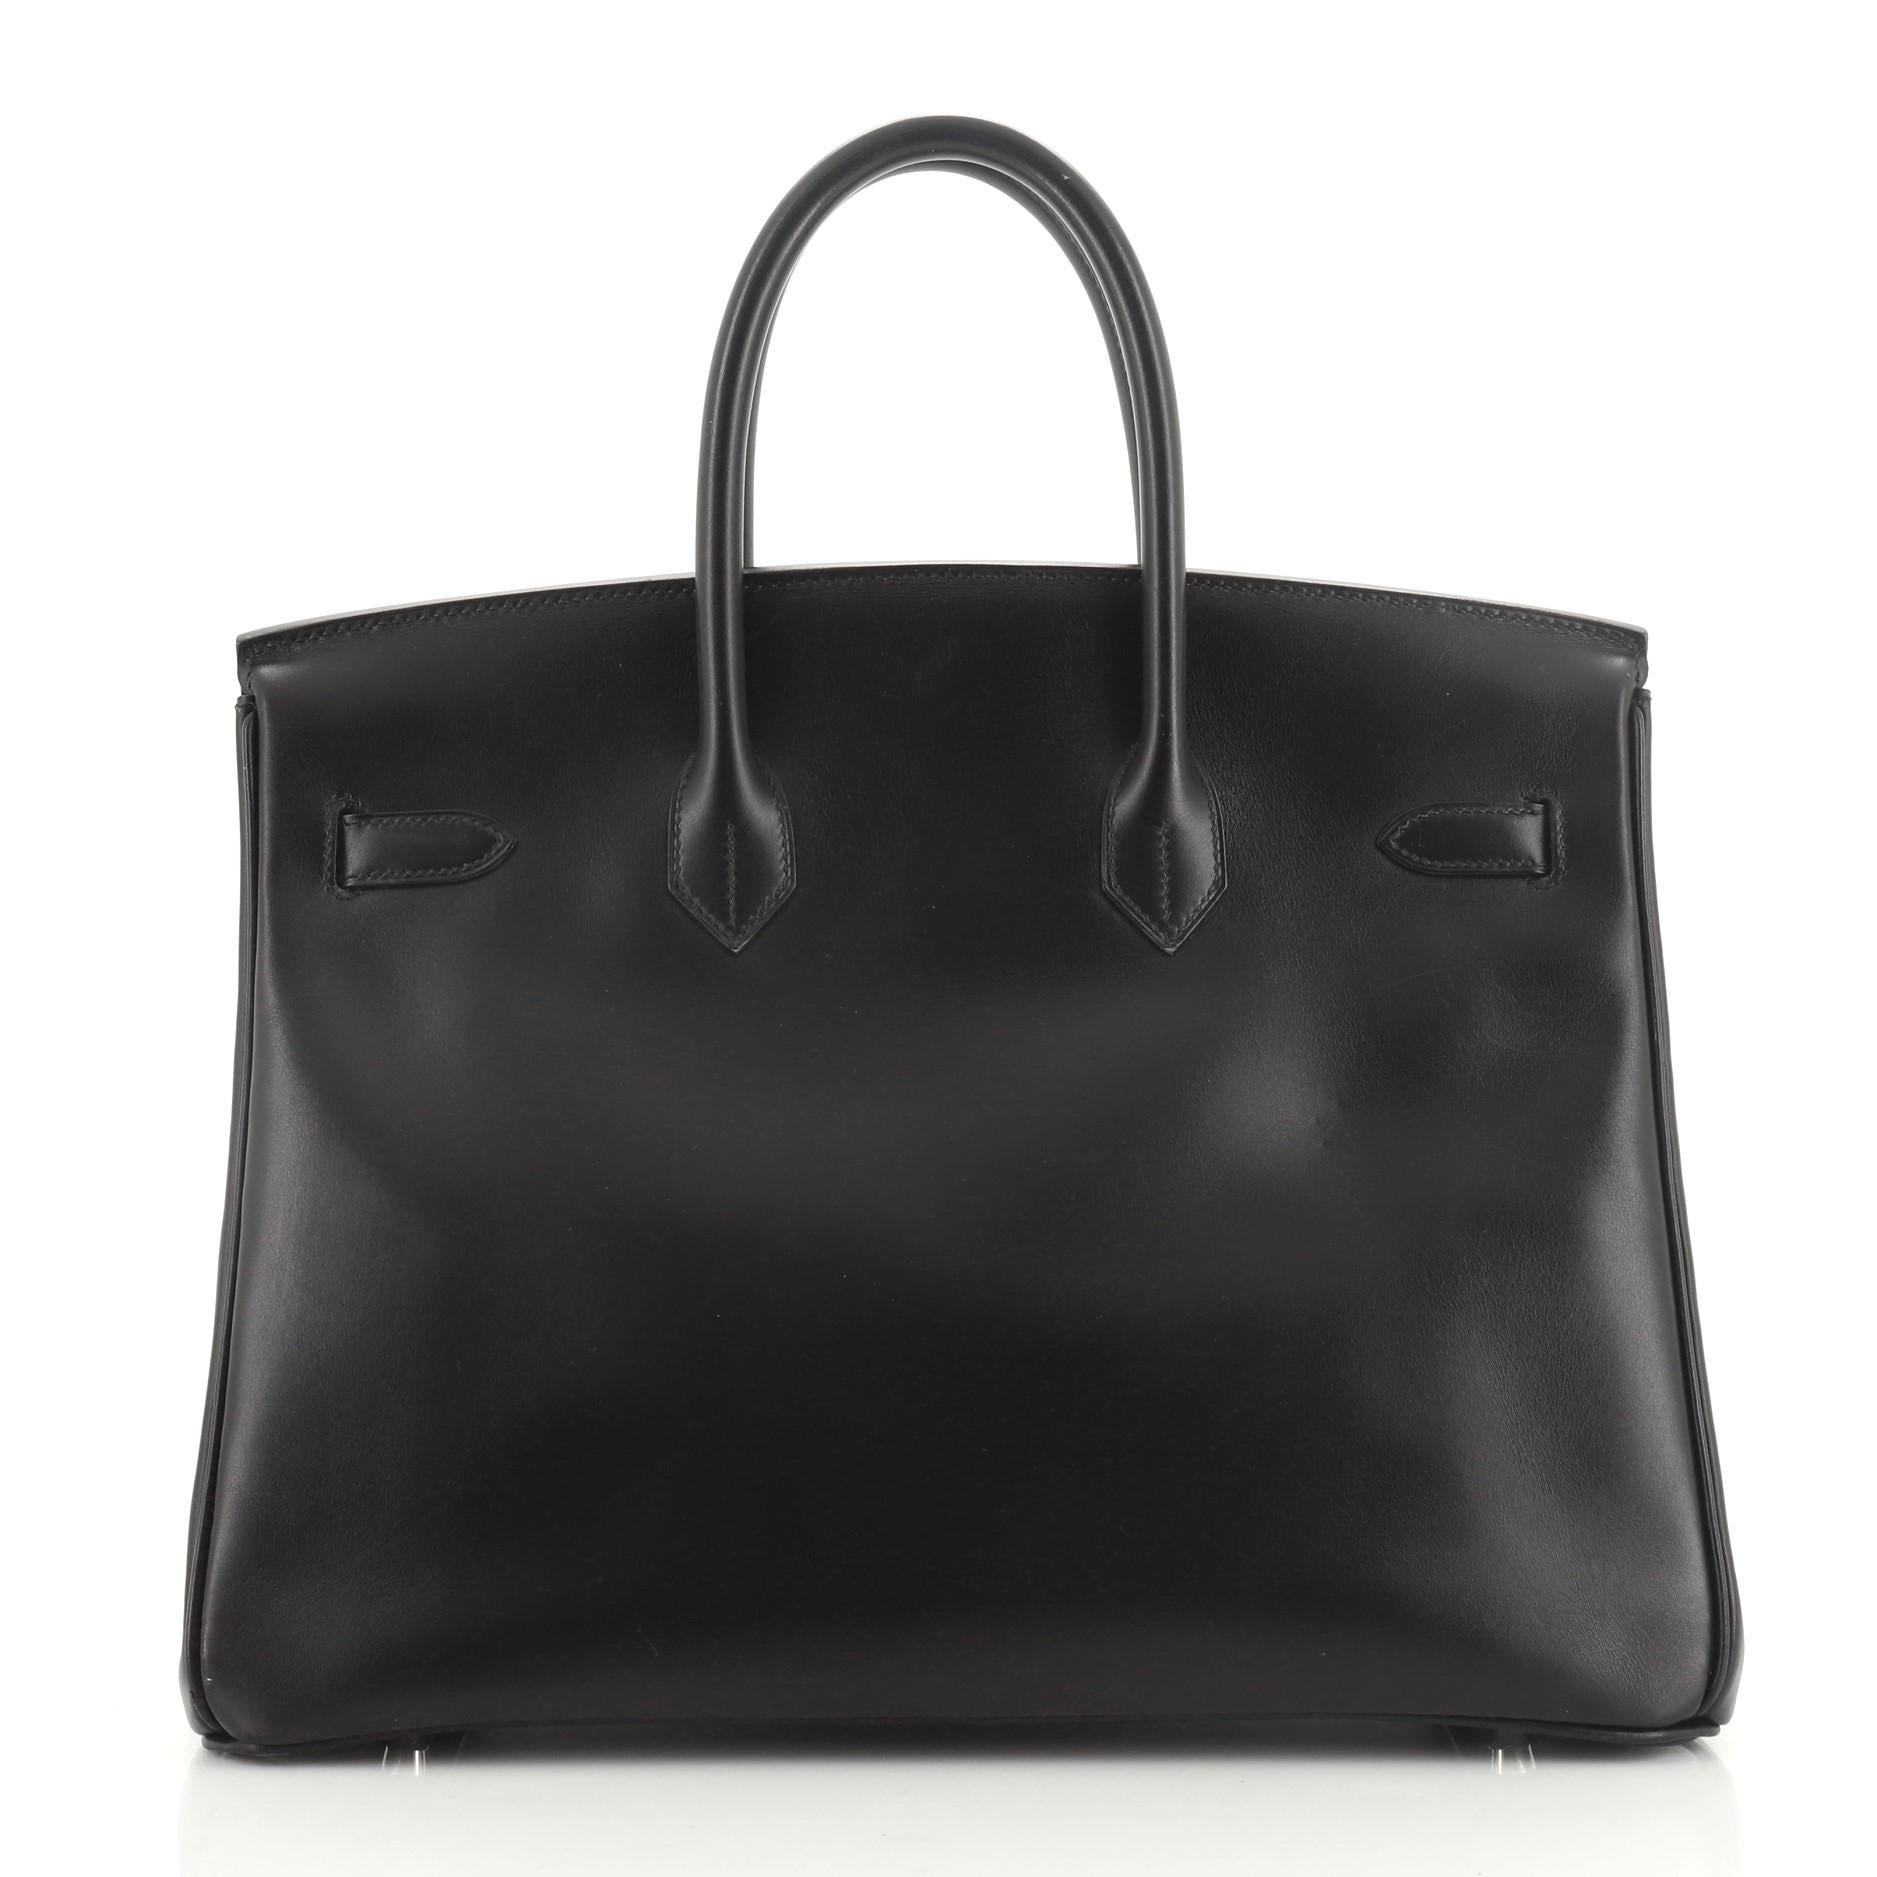 Black Hermes Birkin Handbag Noir Box Calf with Palladium Hardware 35